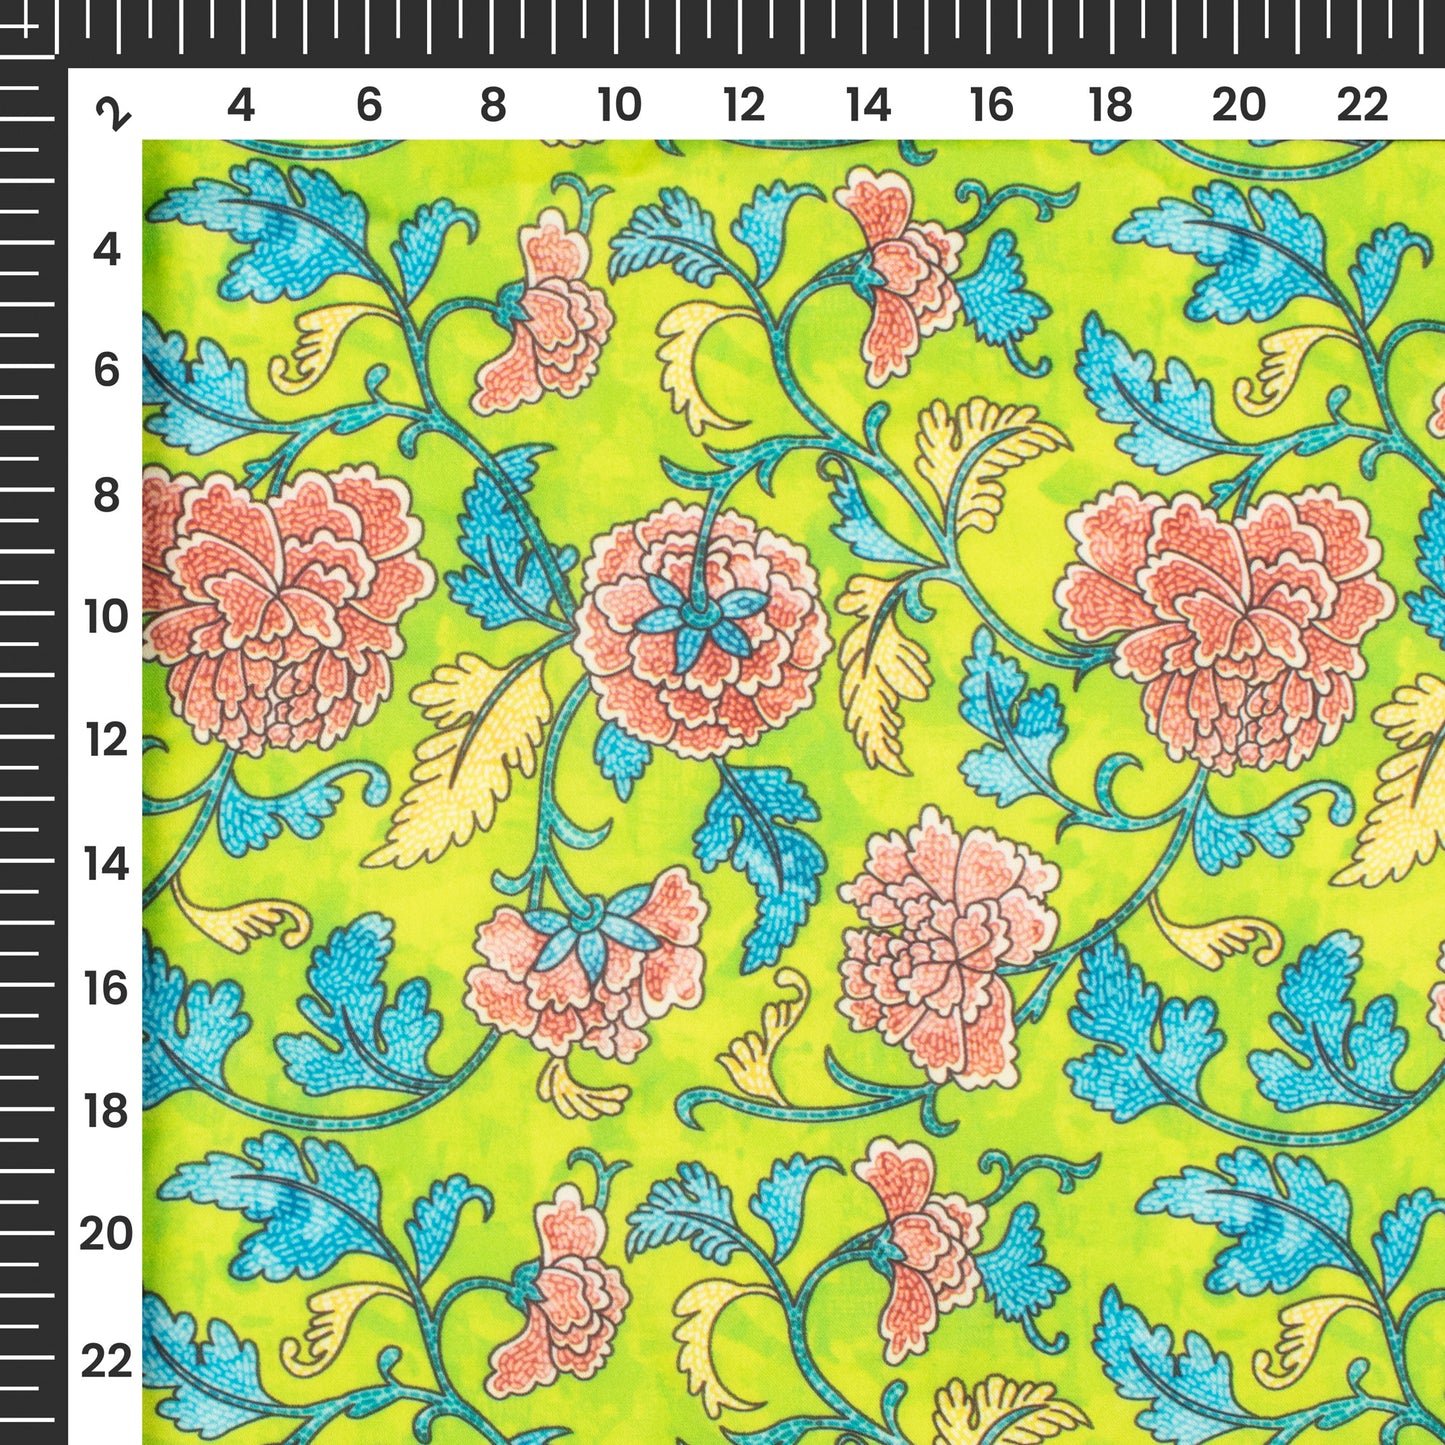 Kelly Green Floral Digital Print Georgette Satin Fabric